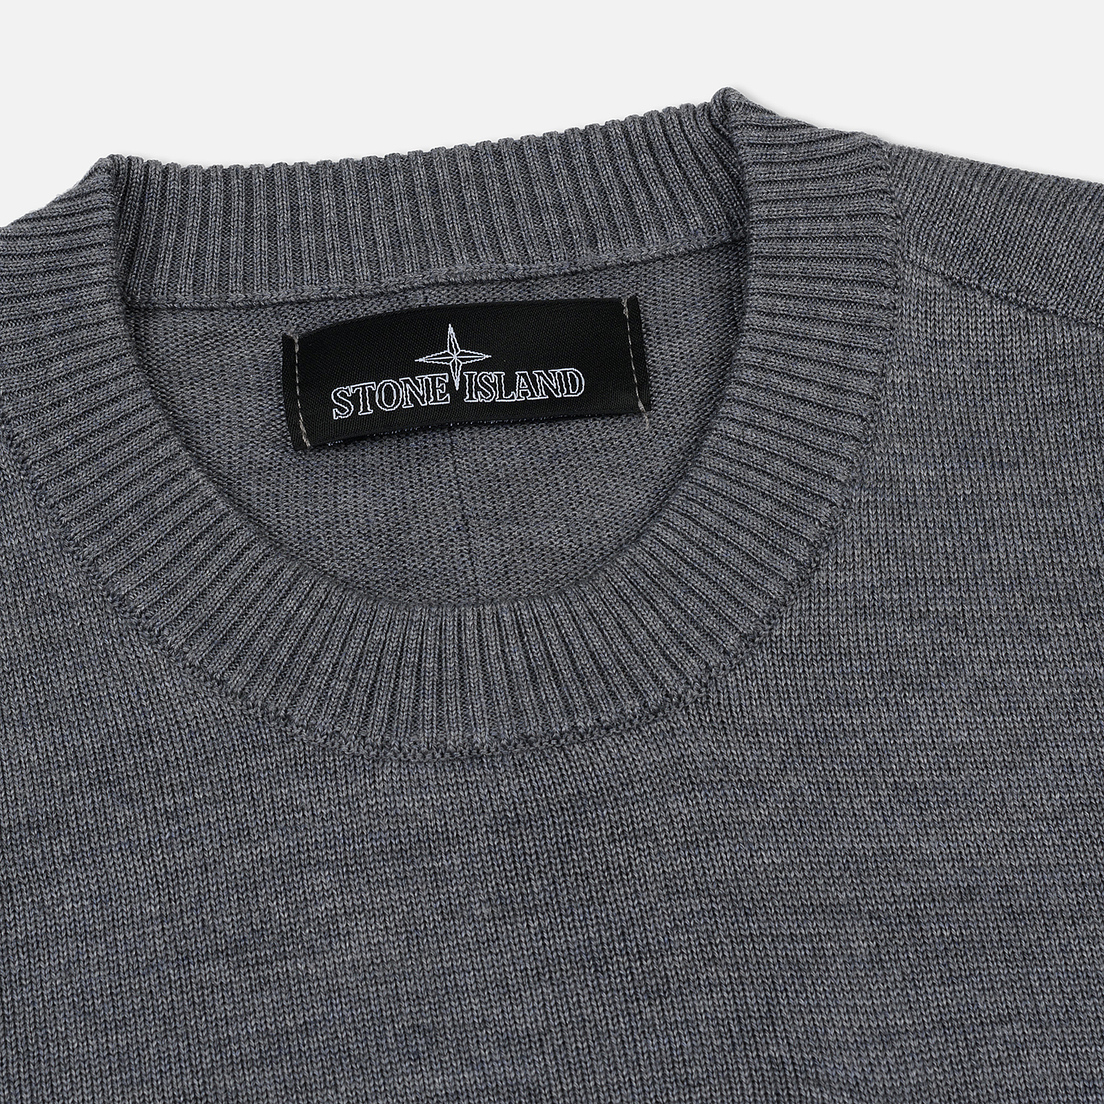 Stone Island Shadow Project Мужской свитер Catch Pocket Crew Neck Virgin Wool/Silk Blend